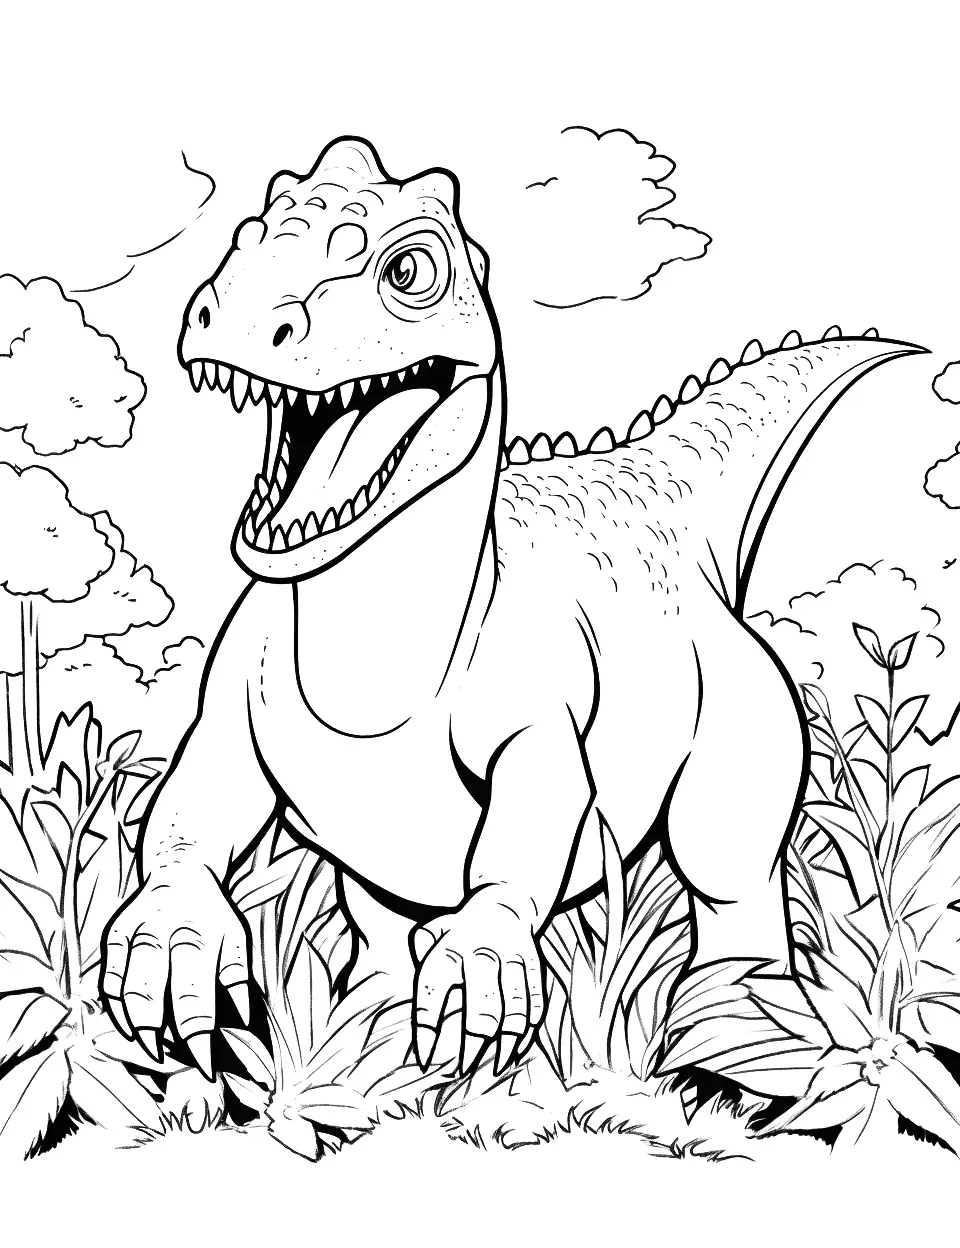 Dinosaur coloring pages free printable sheets